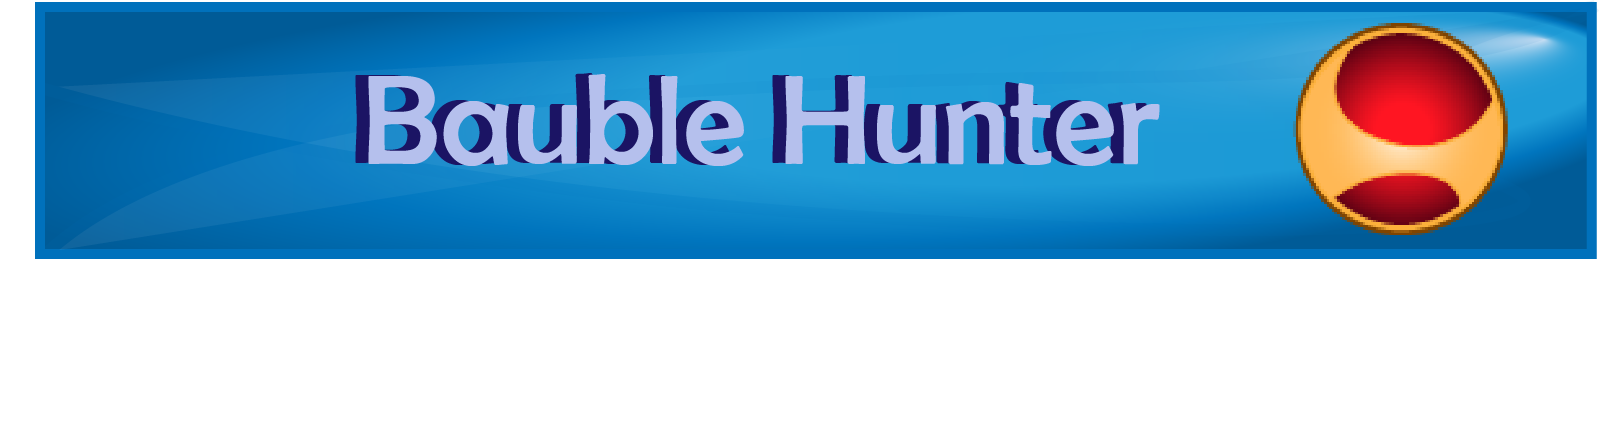 Bauble Hunter